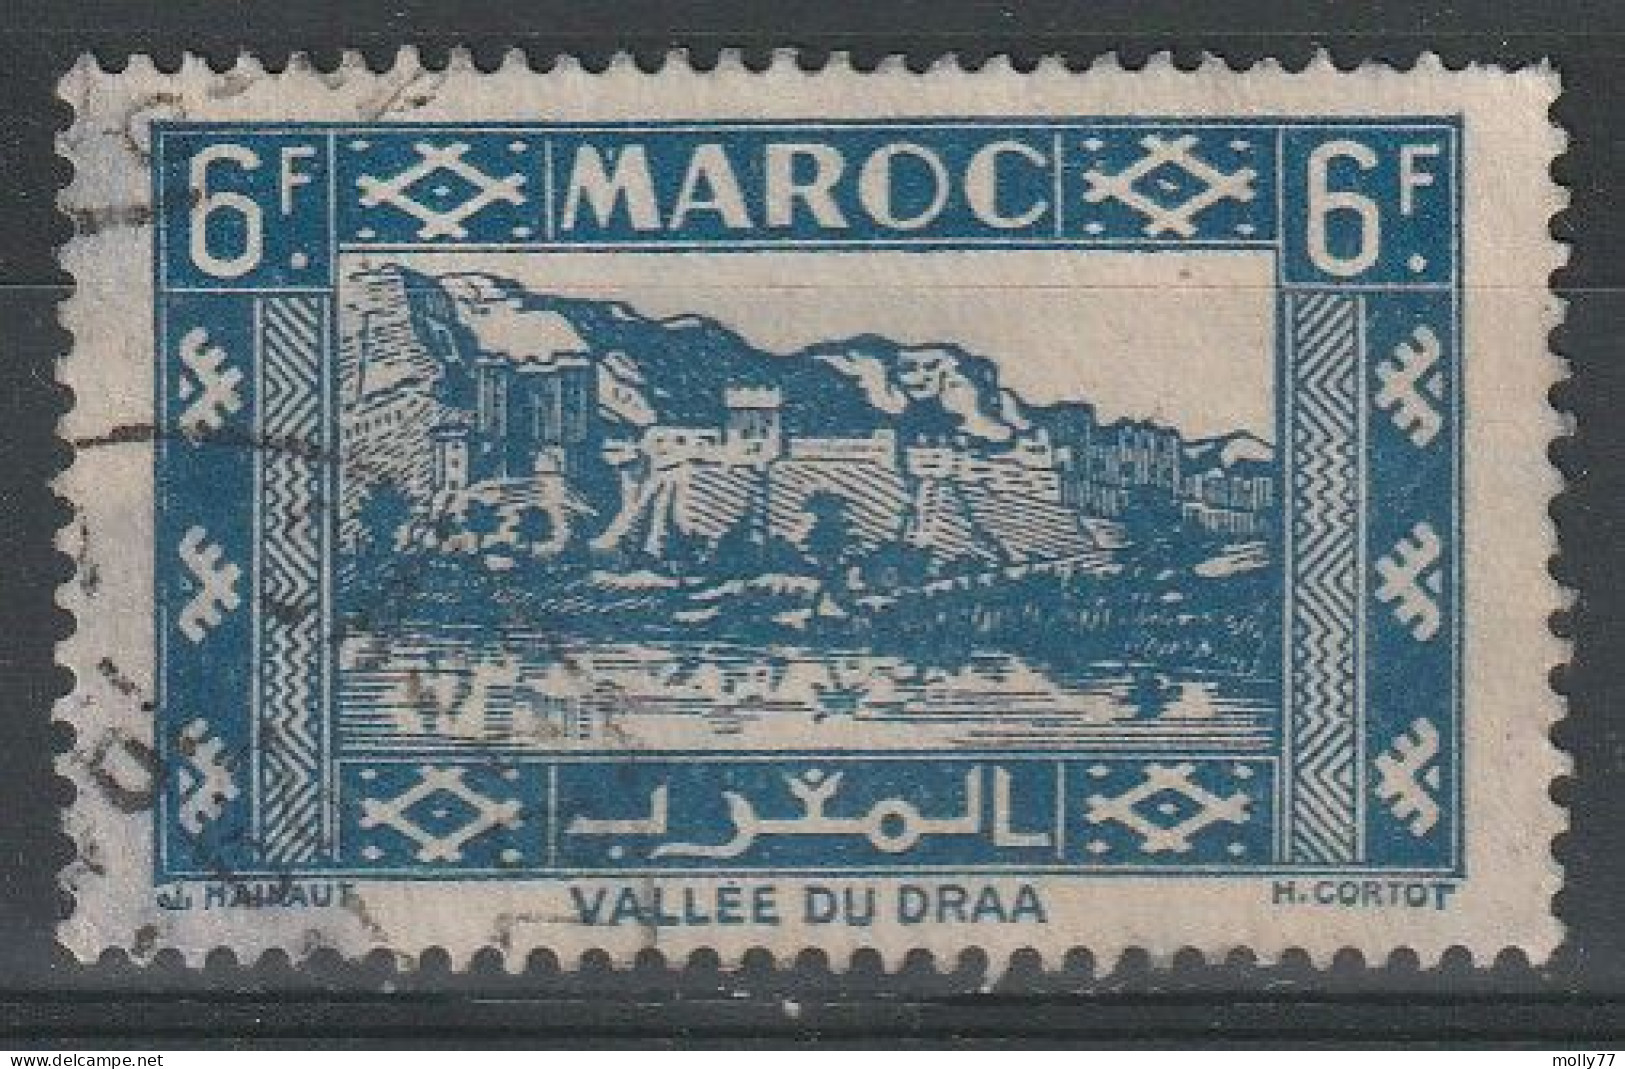 Maroc N°233 - Used Stamps